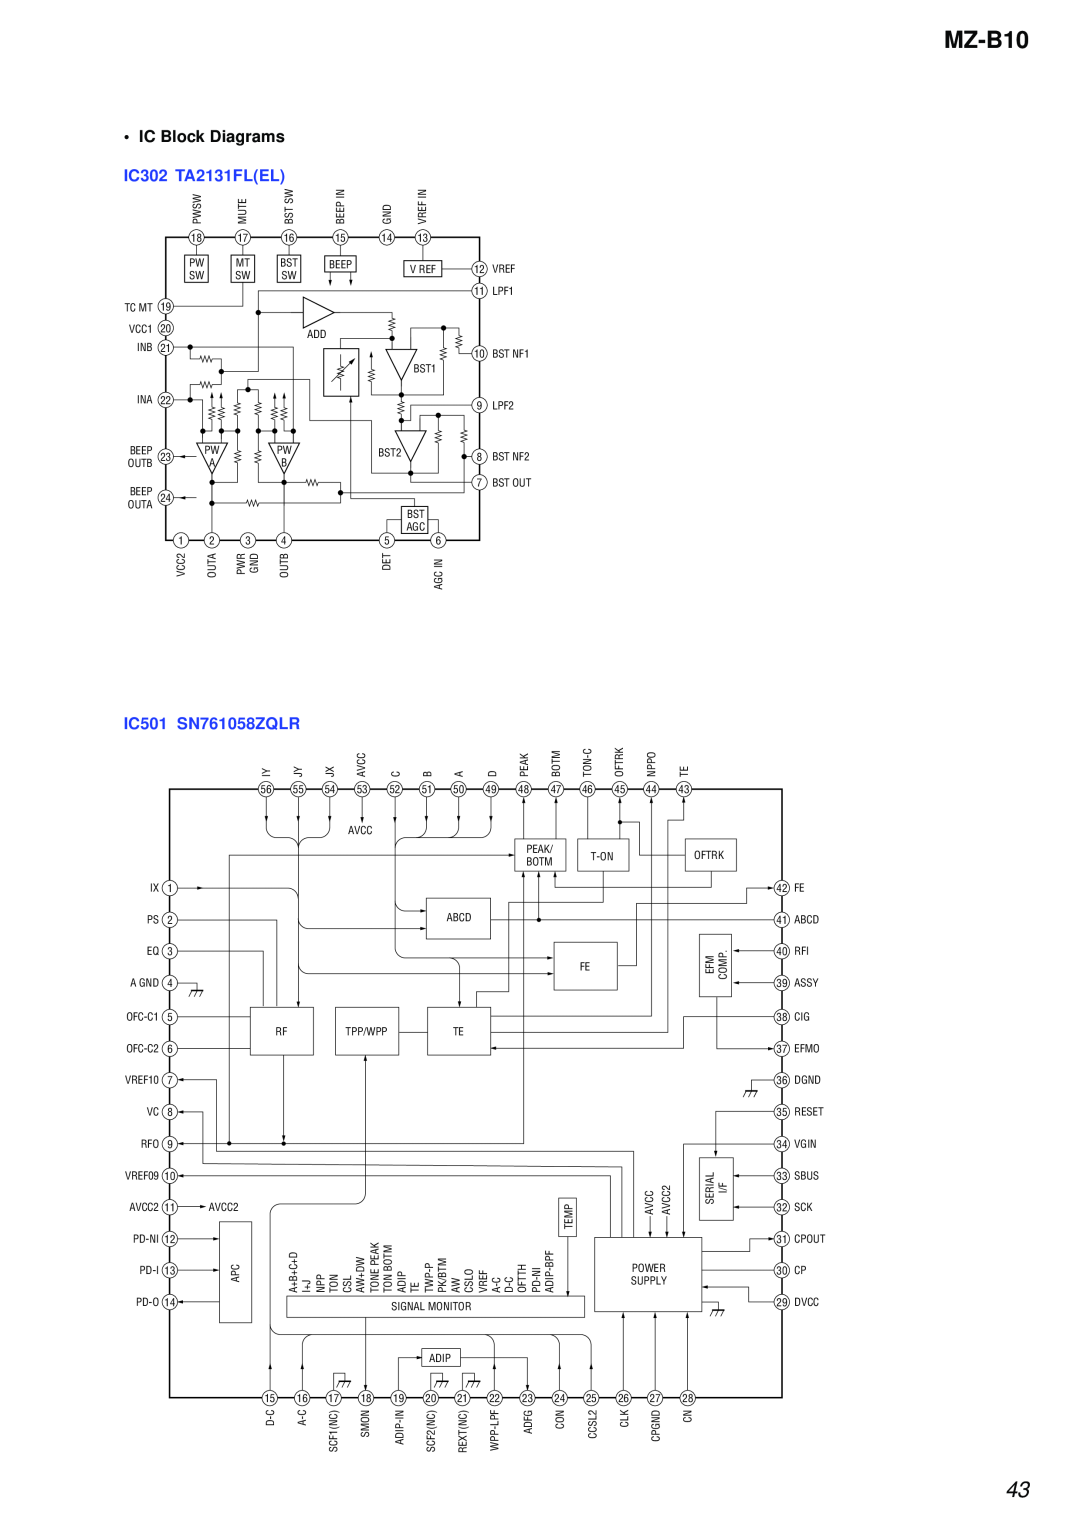 Sony MZ-B10 service manual IC Block Diagrams, IC302 TA2131FLEL, IC501 SN761058ZQLR 